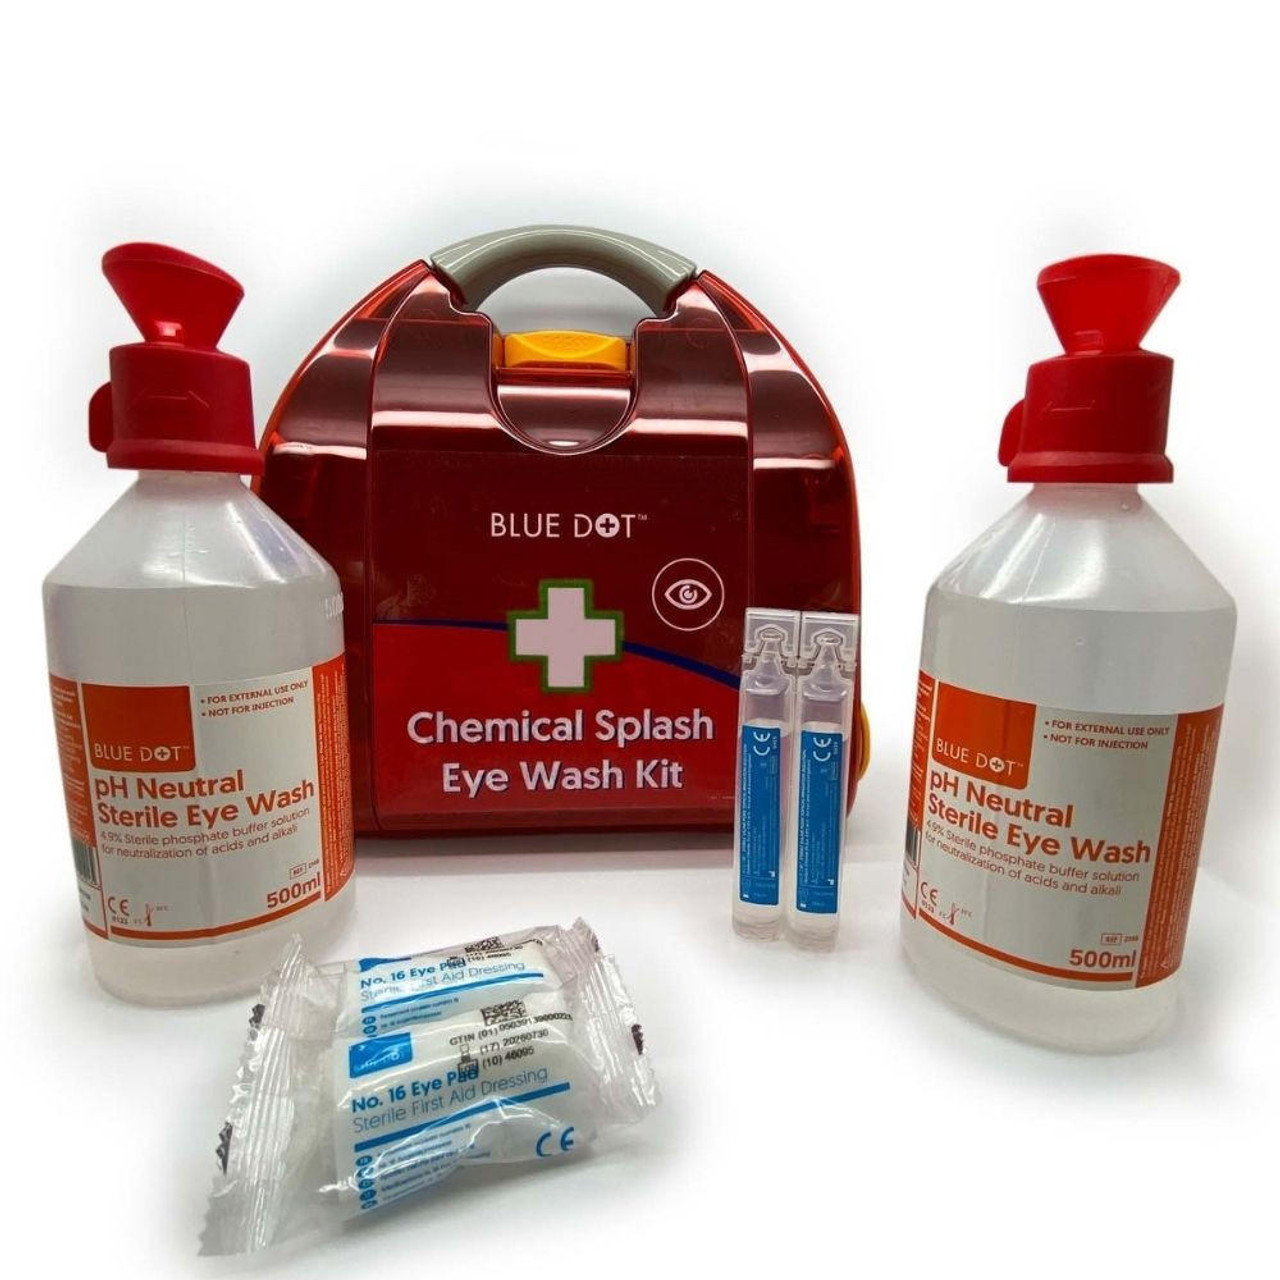 PH Neutral Eyewash Kit for Chemical Splash Includes 2x500ml Buffered Eyewash Bottles